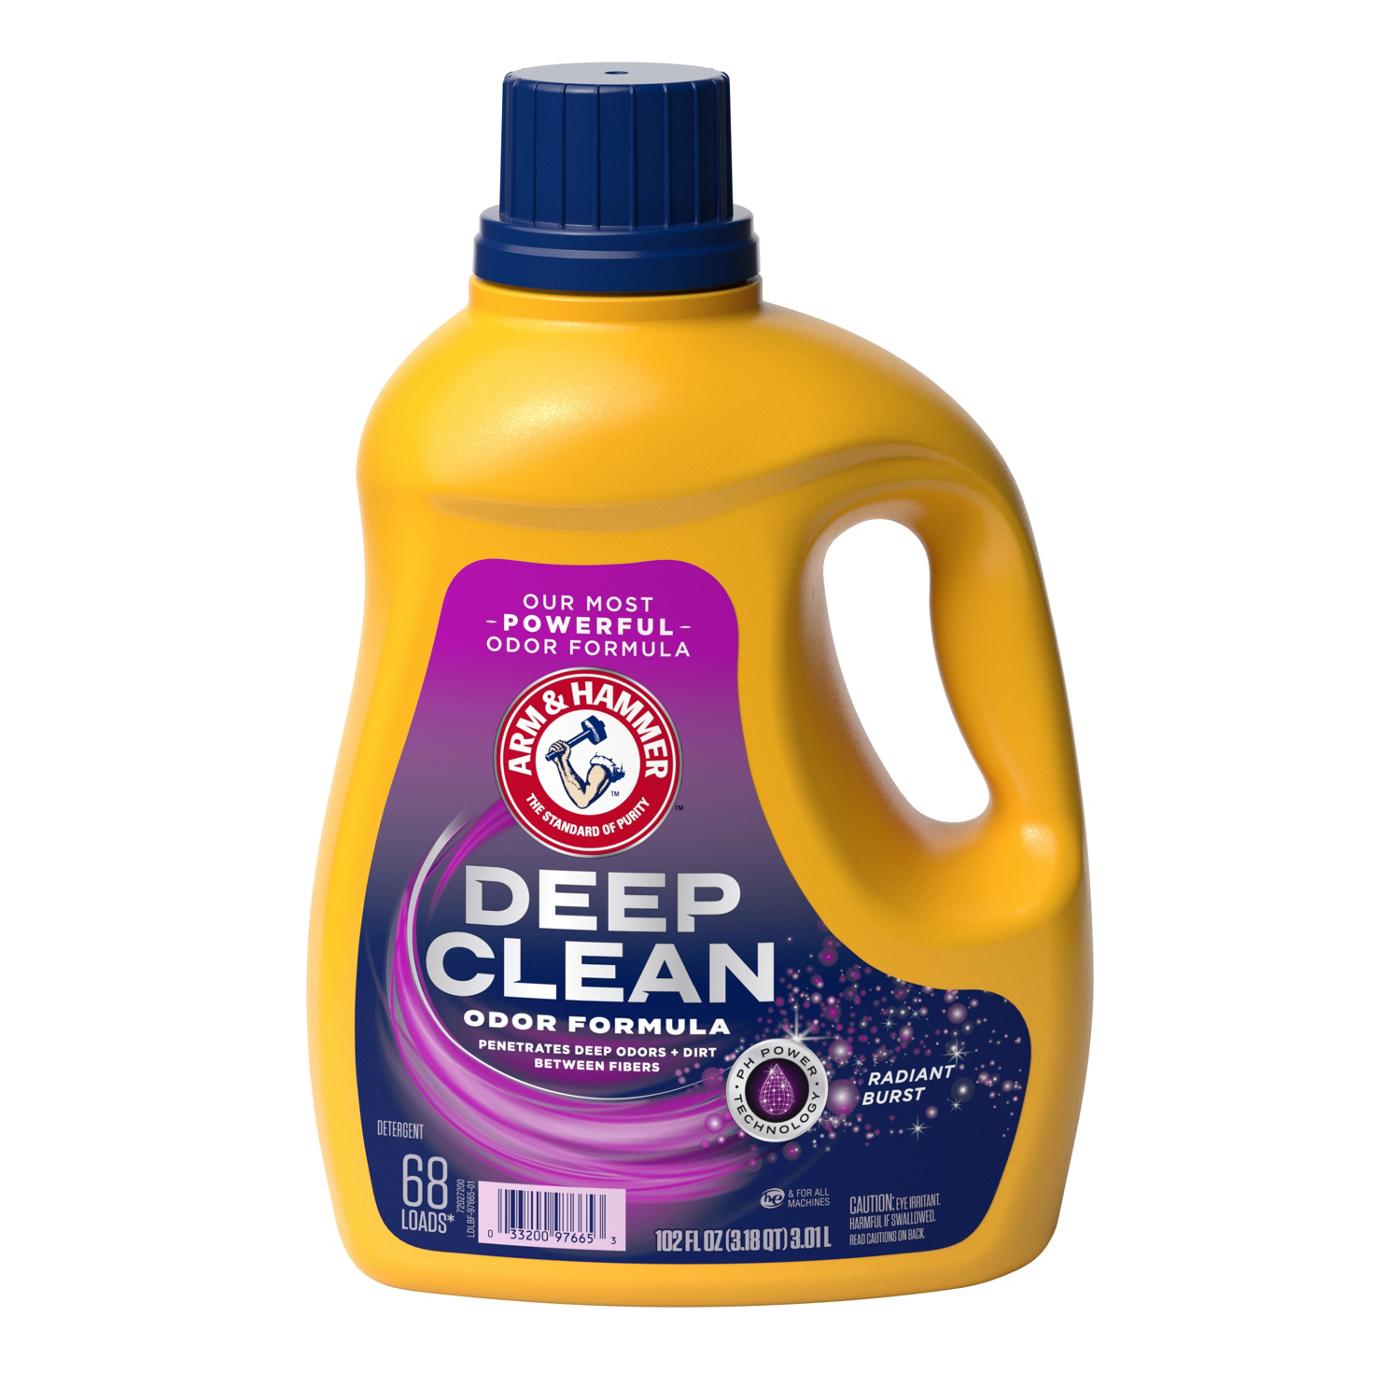 Arm & Hammer Deep Clean Odor HE Liquid Laundry Detergent, 68 Loads - Radiant Burst; image 1 of 2